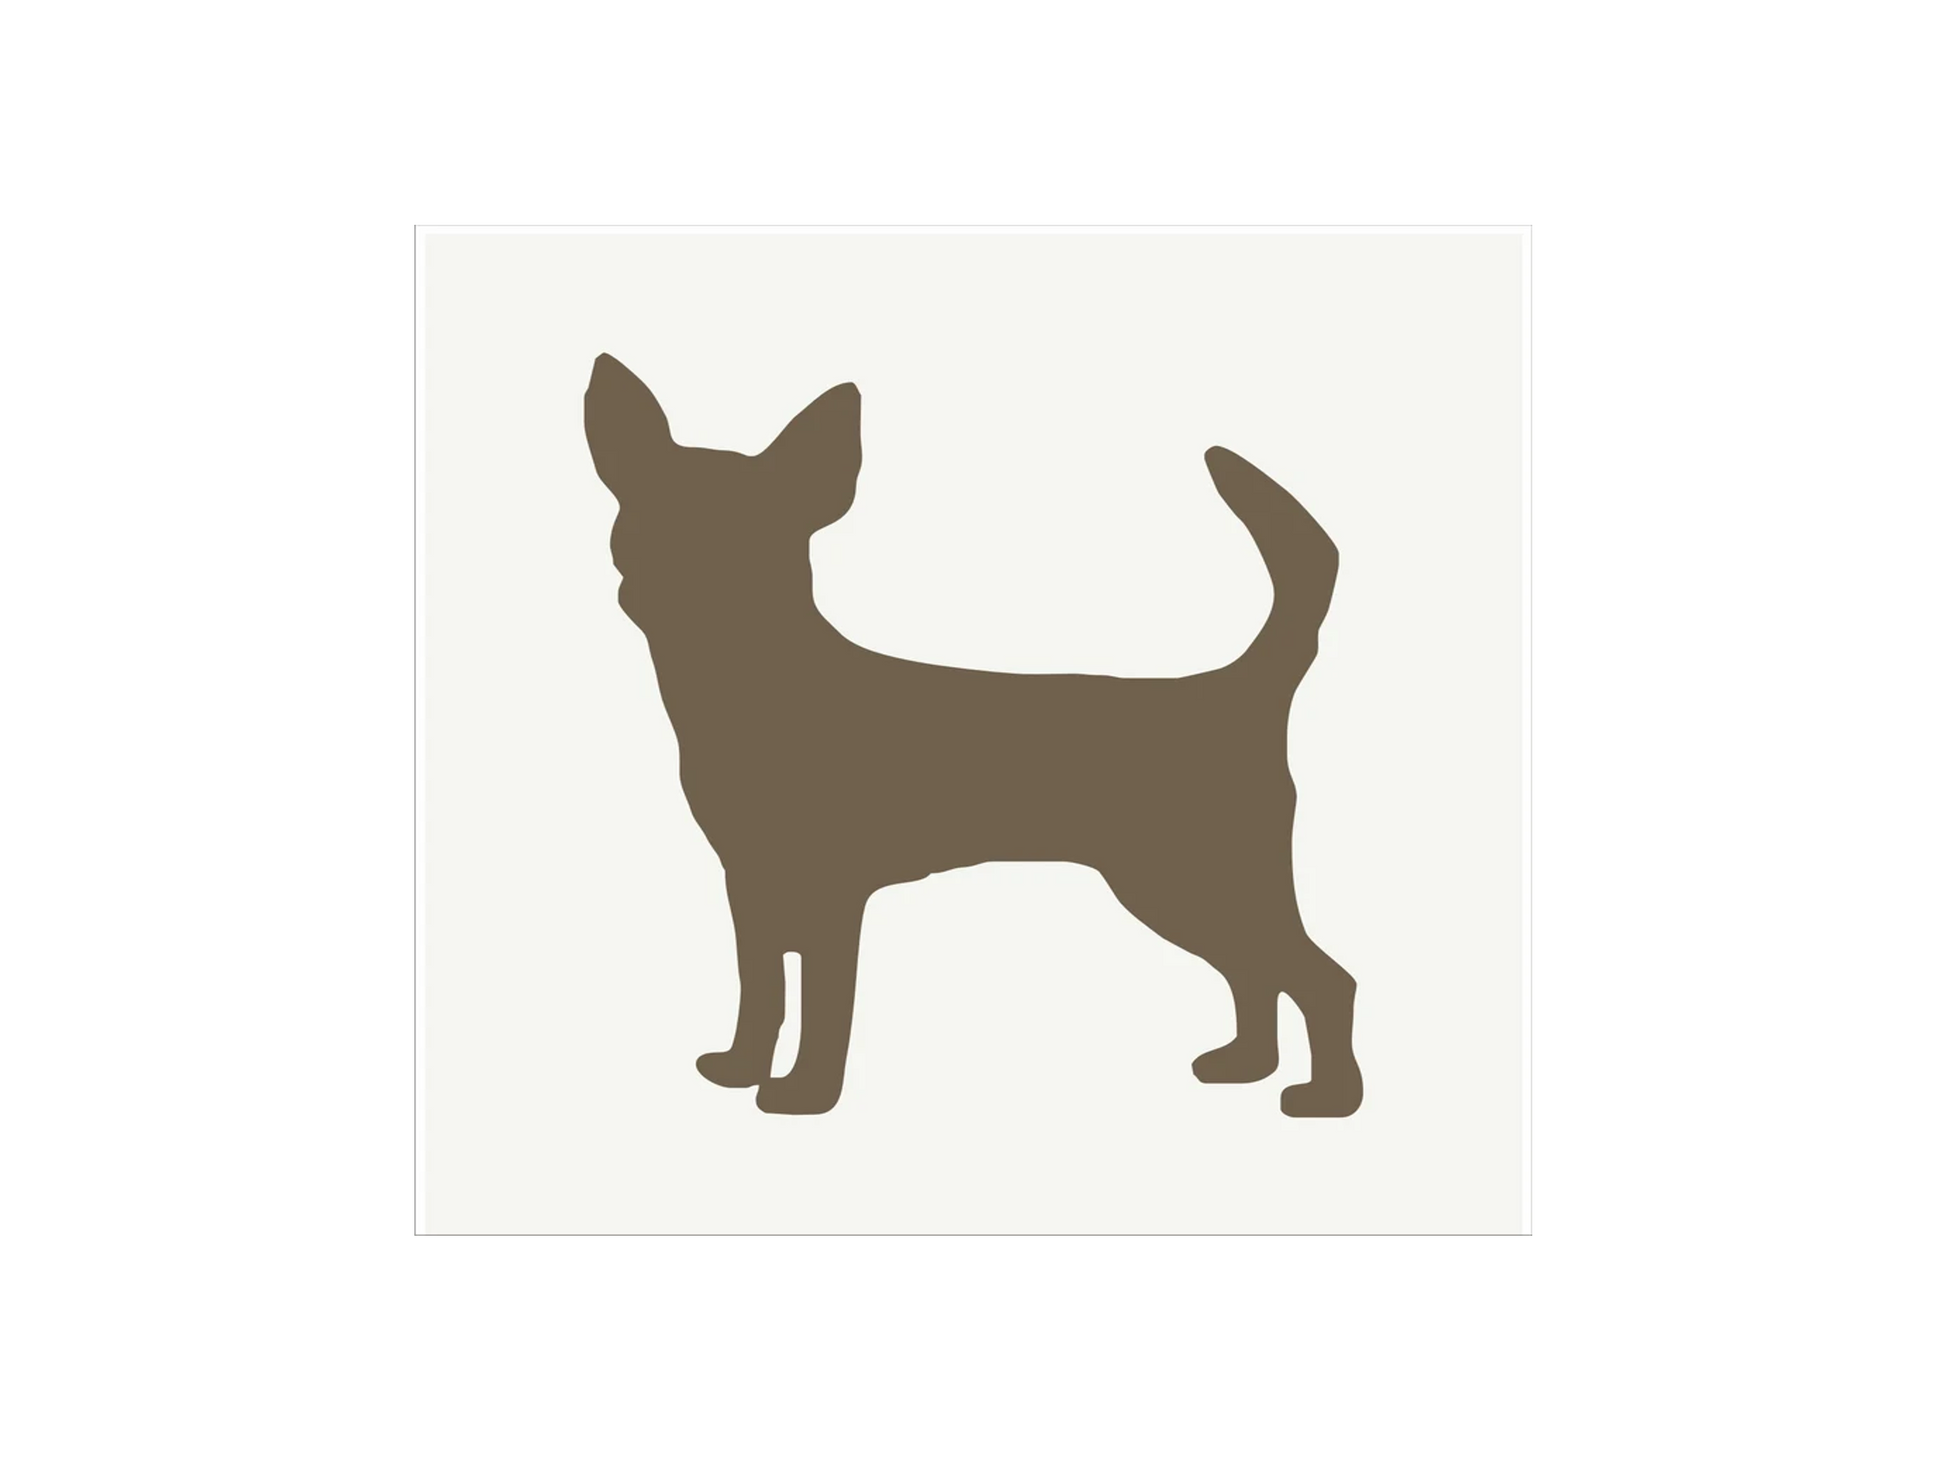 Chihuahua Dog Stencil - Large, 12.5" x 12.5" - Superior Stencils